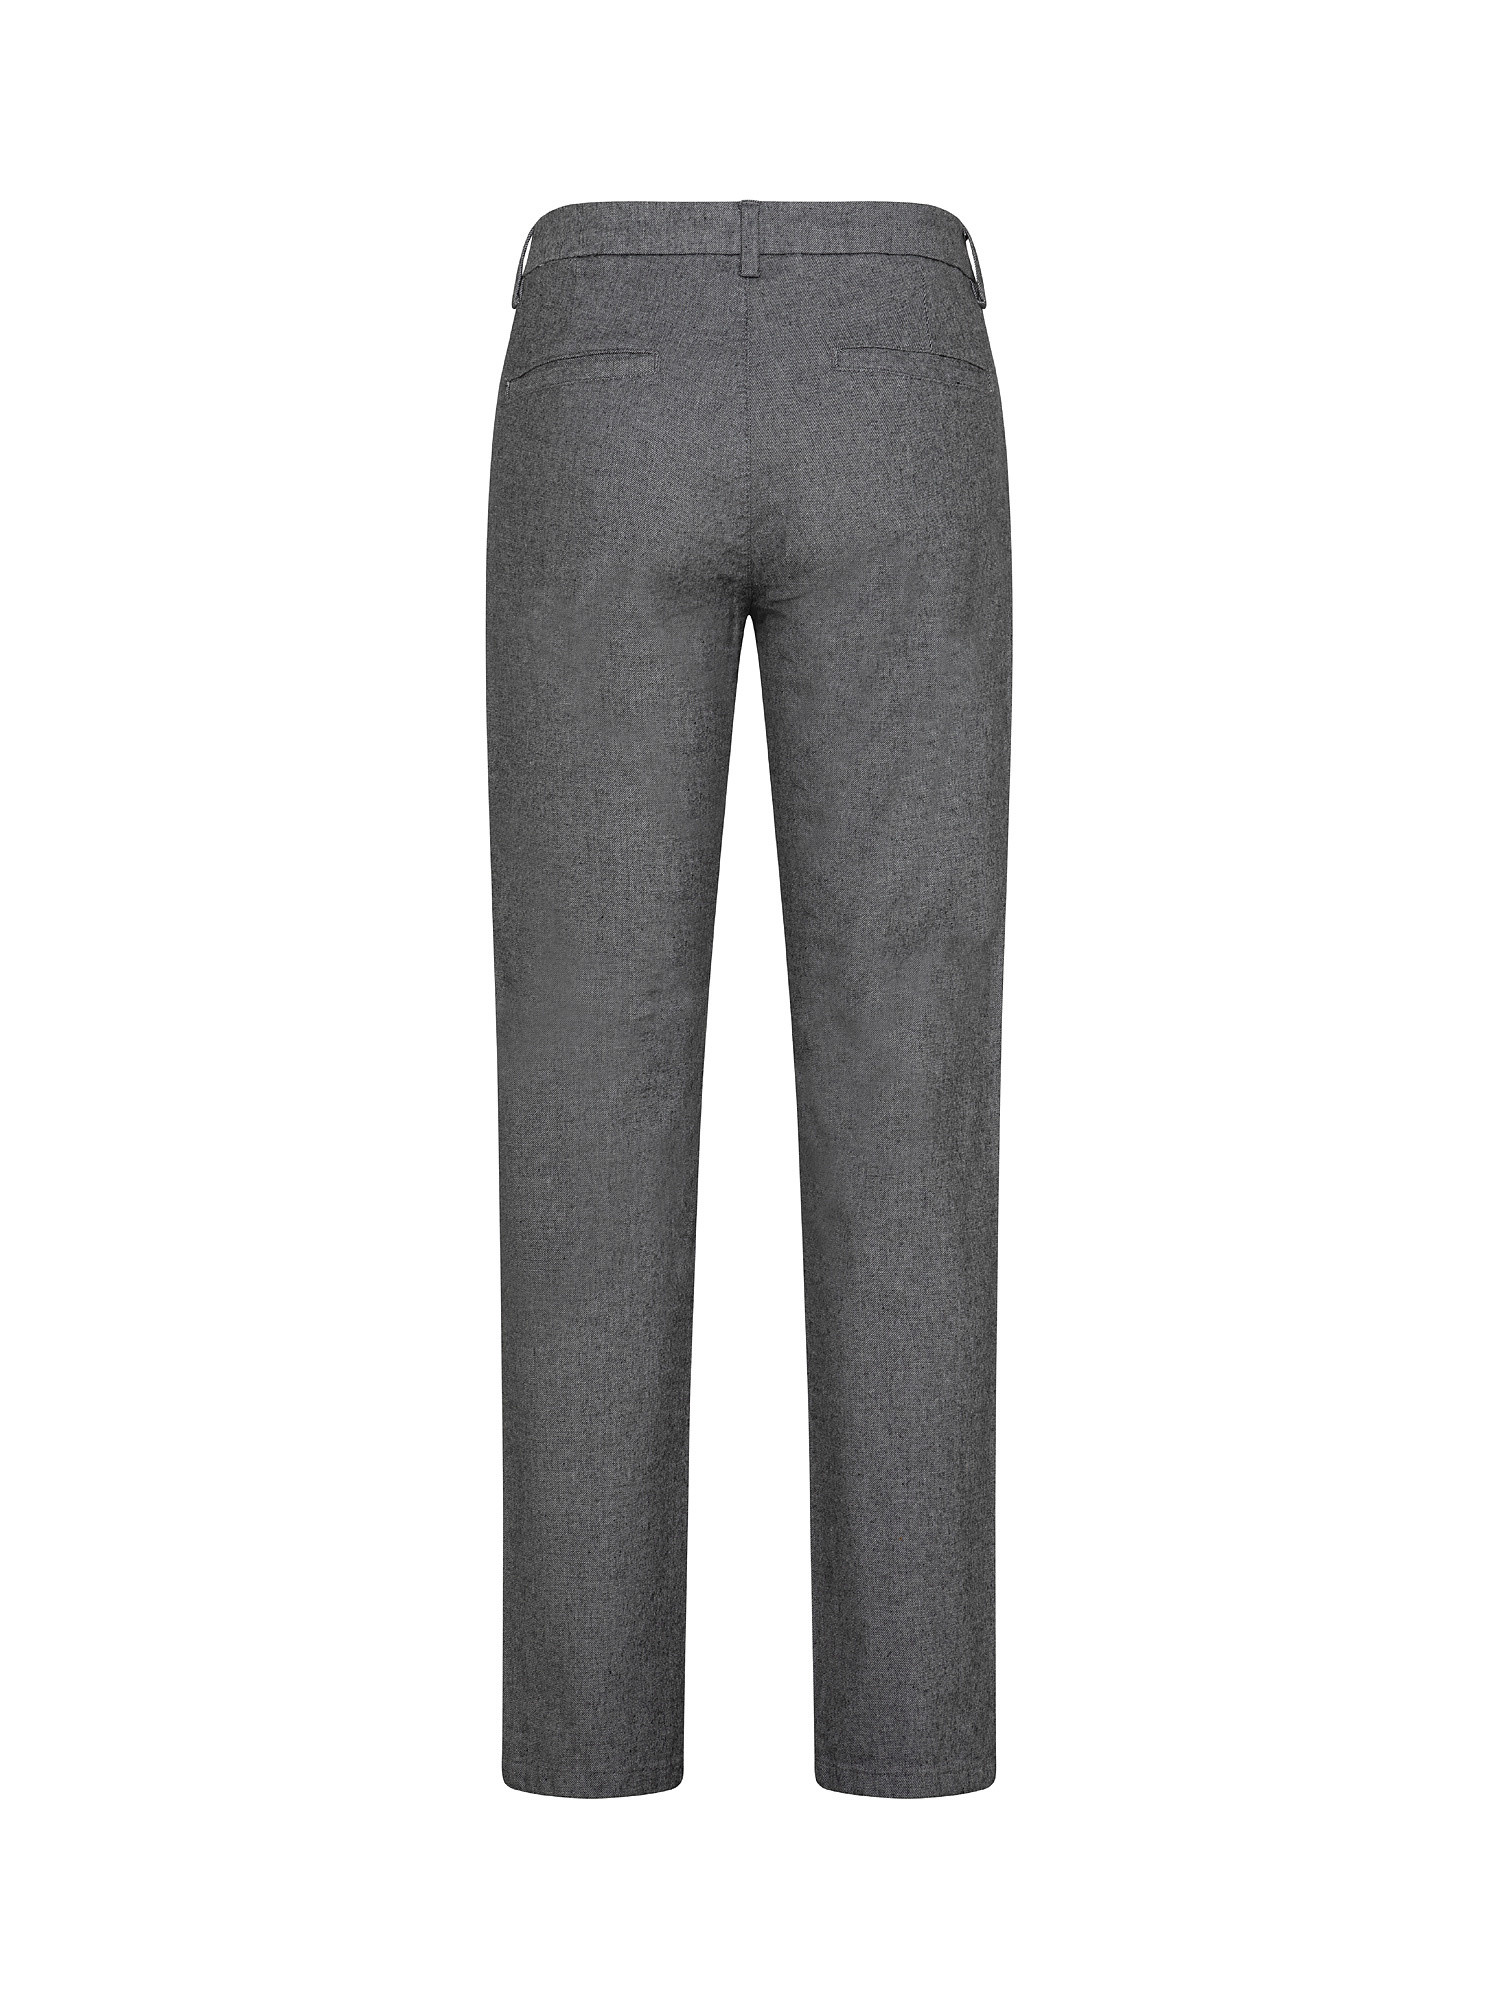 Pantalone Chino, Grigio, large image number 1